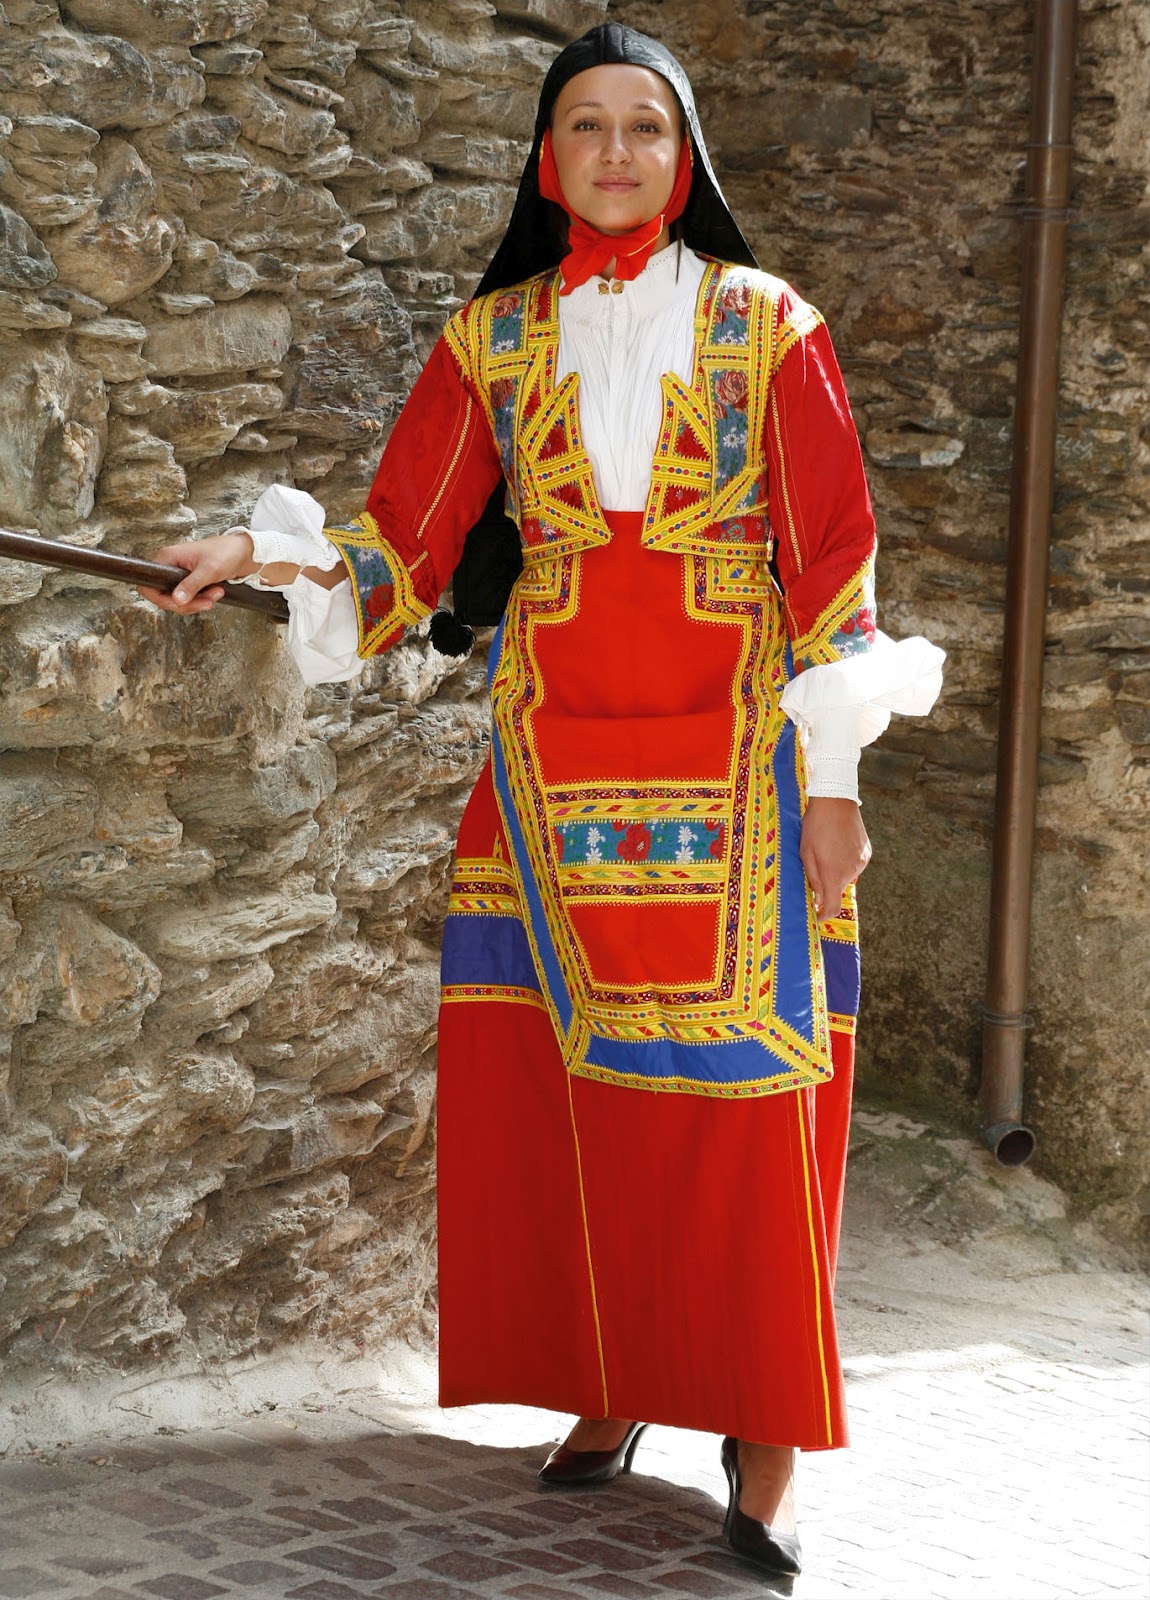 Sardinian Traditional Clothing - Sardinian People